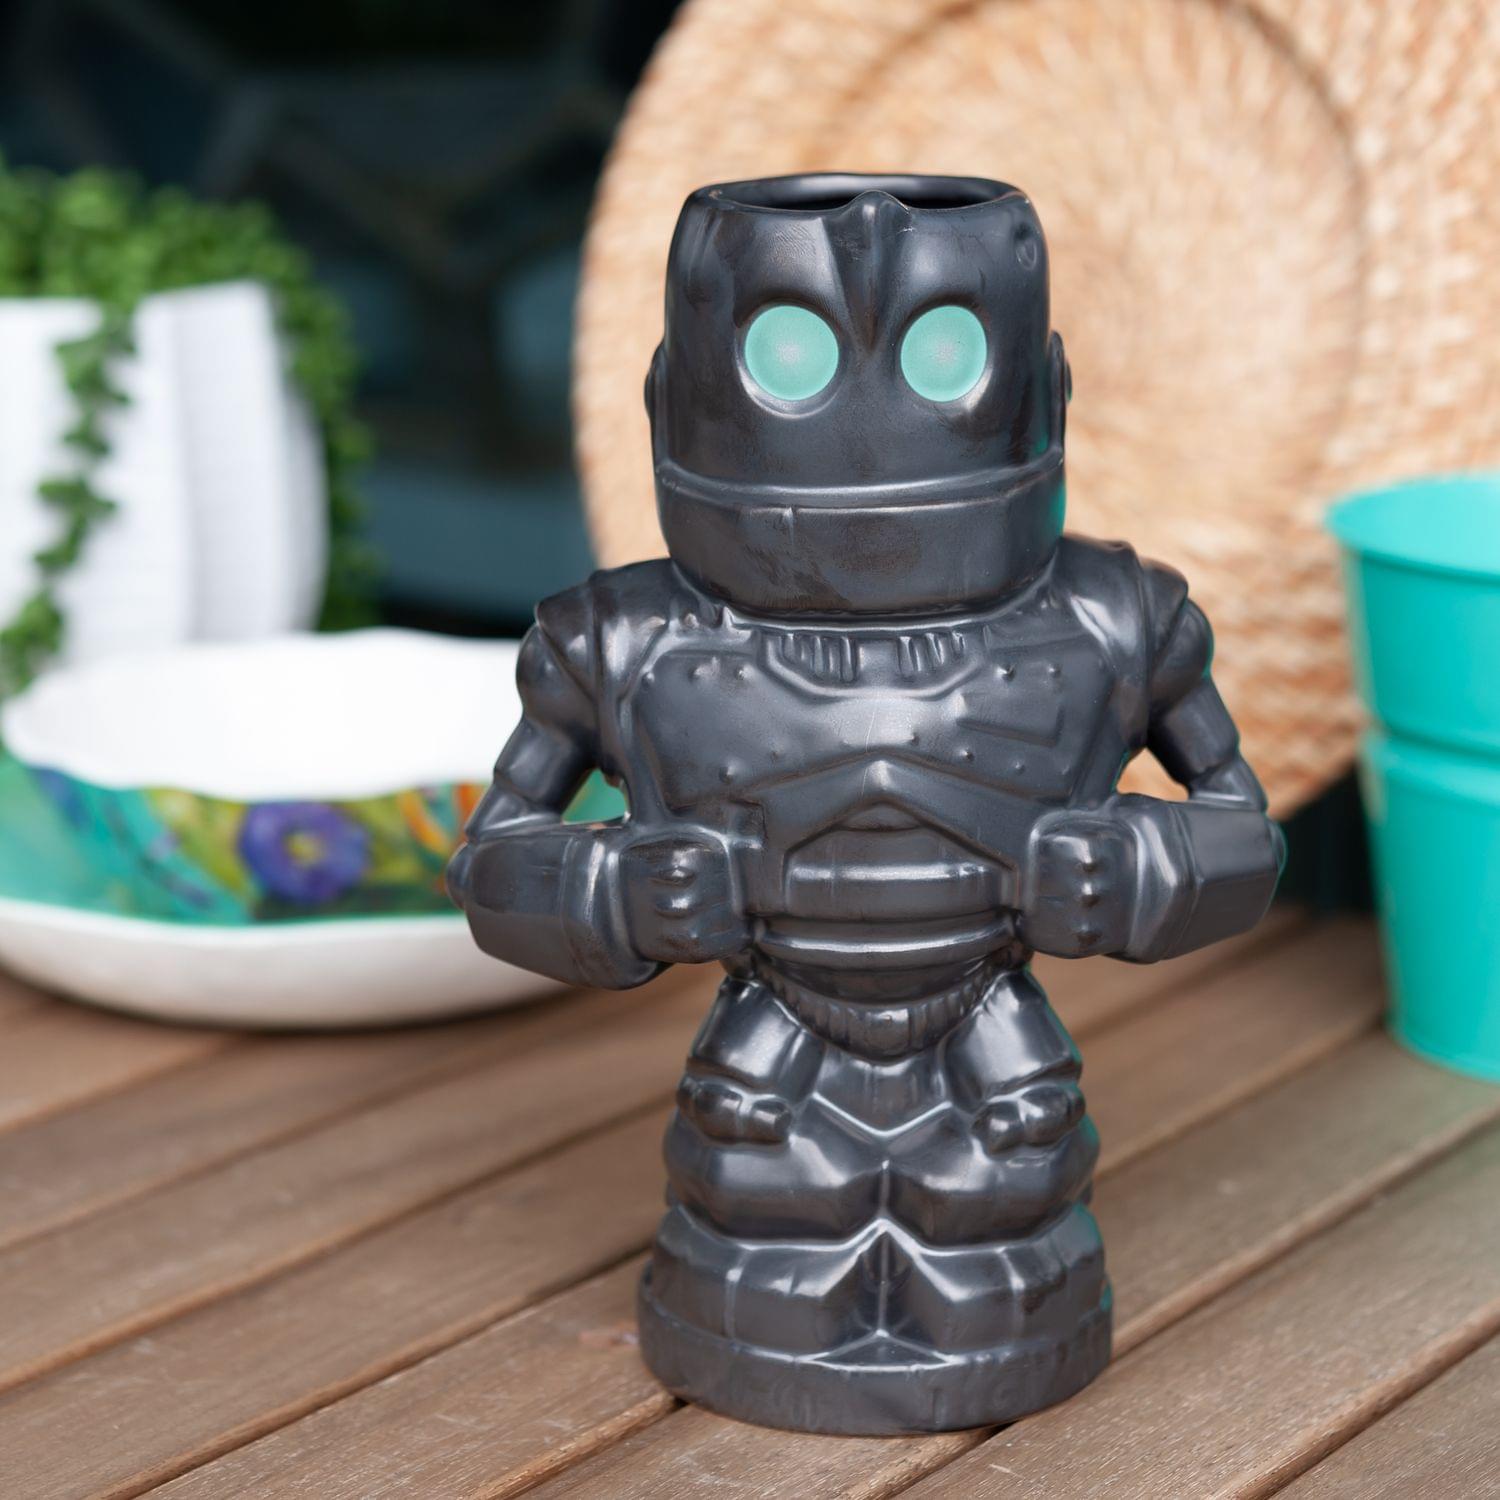 Geeki Tikis Iron Giant Ceramic Mug | Holds 28 Ounces